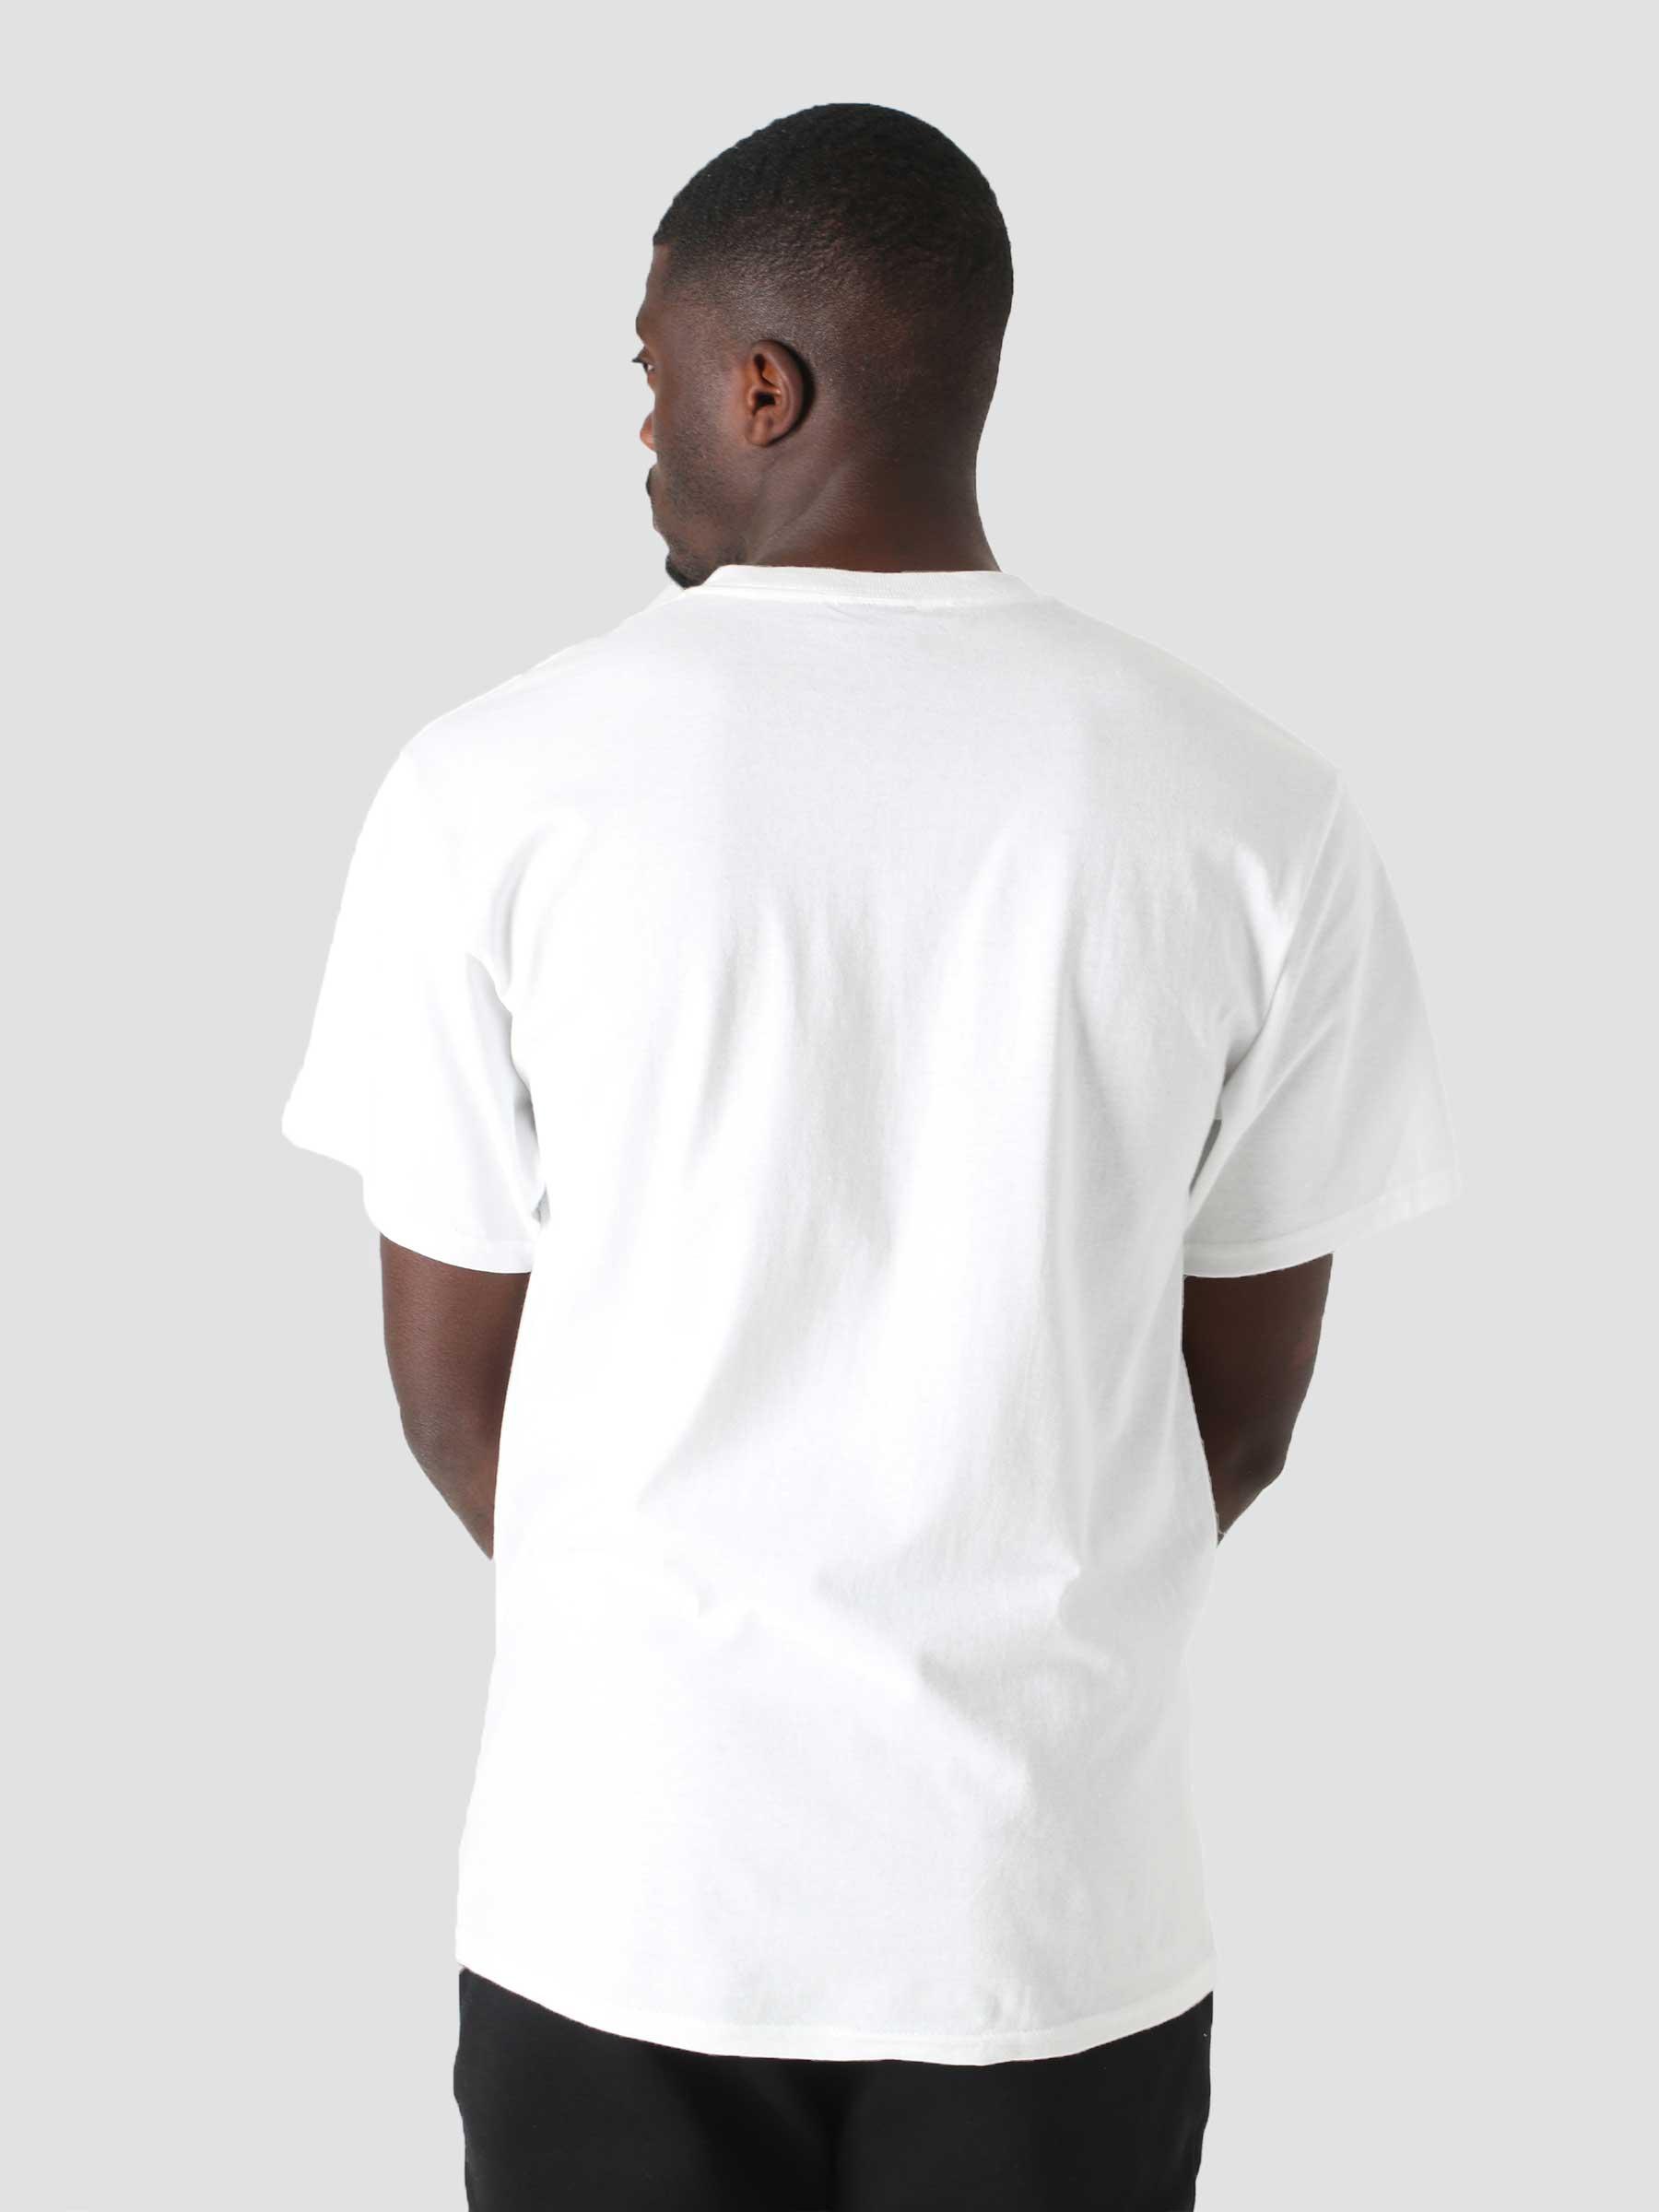 Eye Witness T-Shirt White TS01524-White